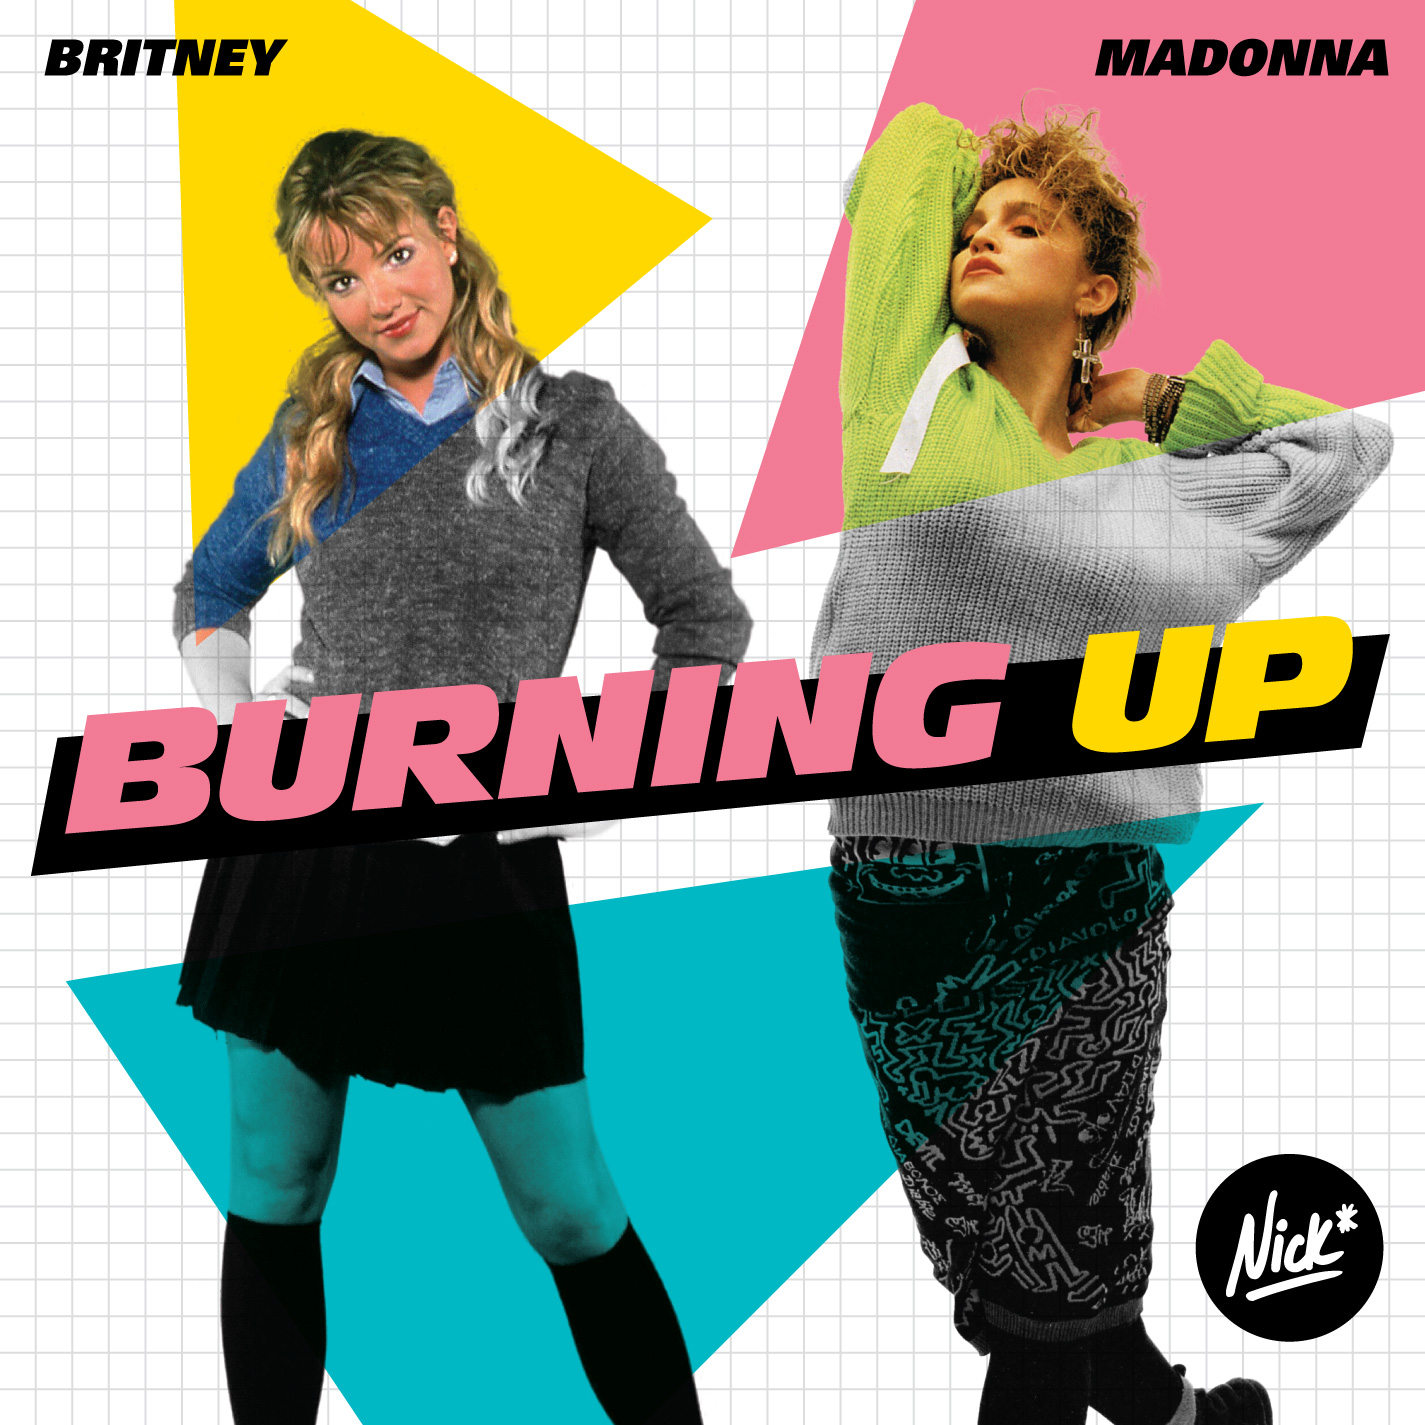 Britney Spears + Madonna - Burning Up Nick* Total '80s Mashup